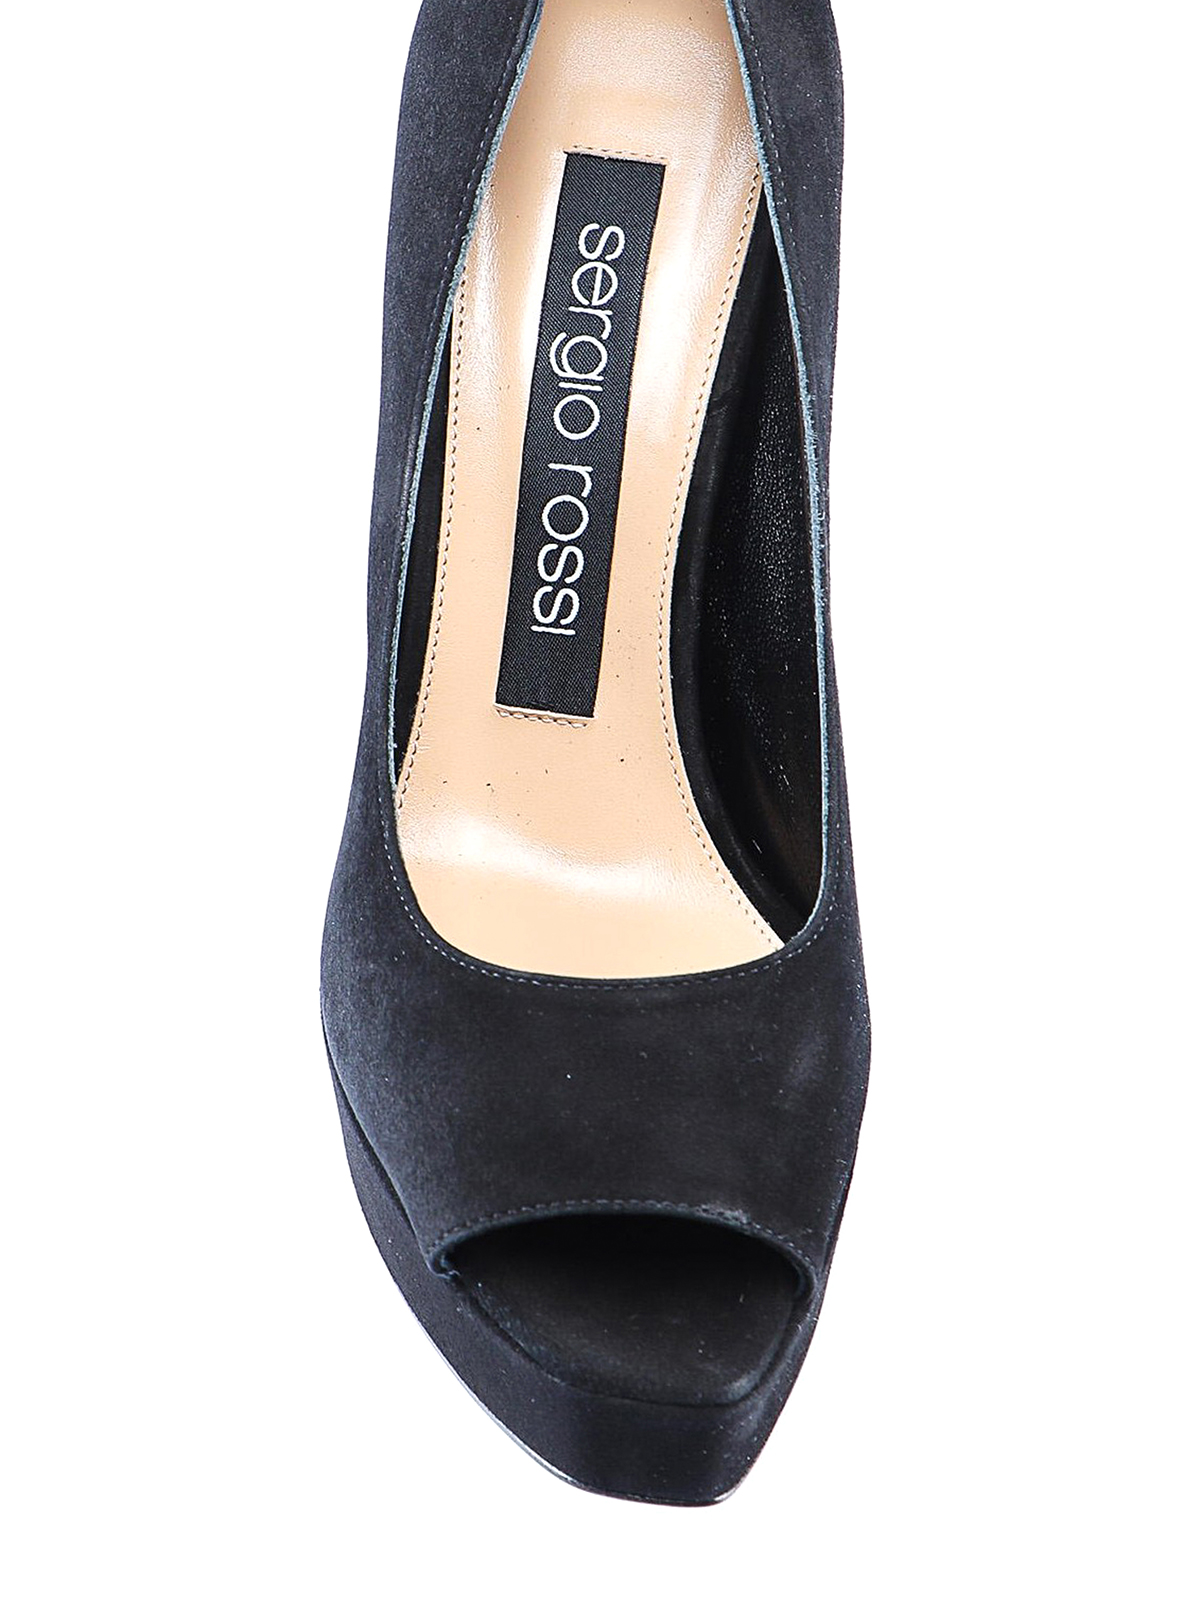 Court shoes Rossi Black suede peep toe - A85170MCAZ011000